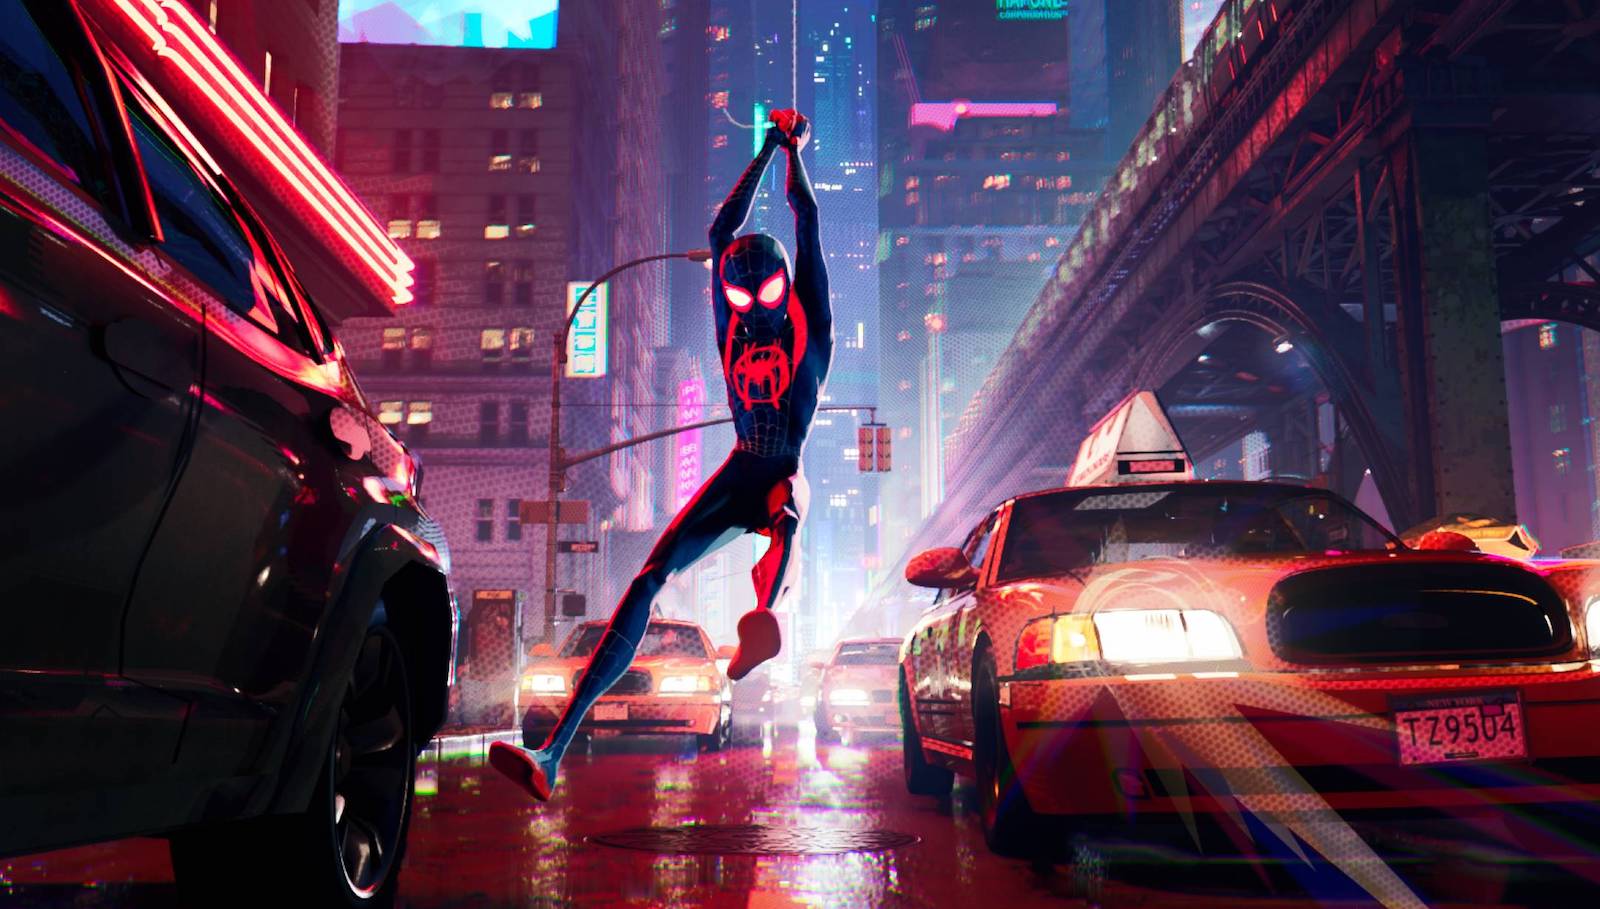 Spider-Man flies through a New York city street above taxicabs